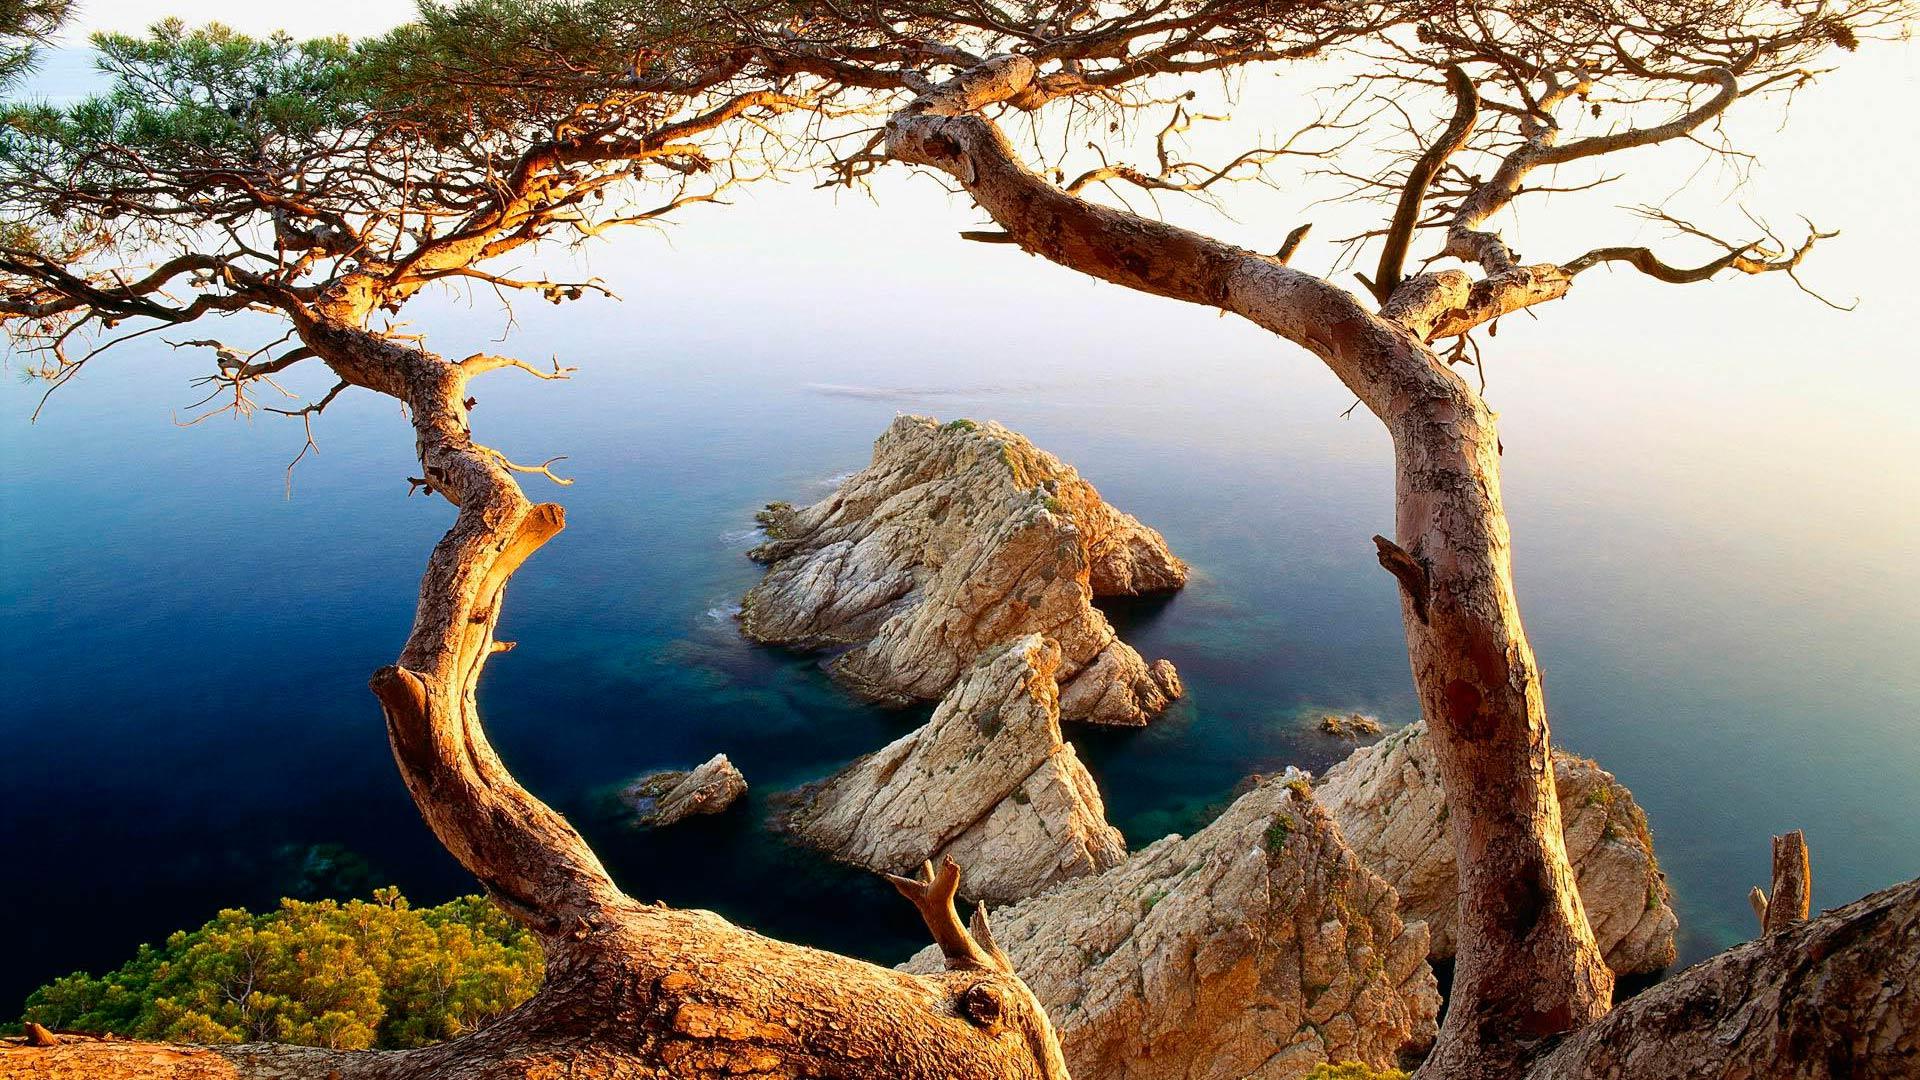 The coast of Tossa de Mar, Costa Brava. Spain wallpaper and image